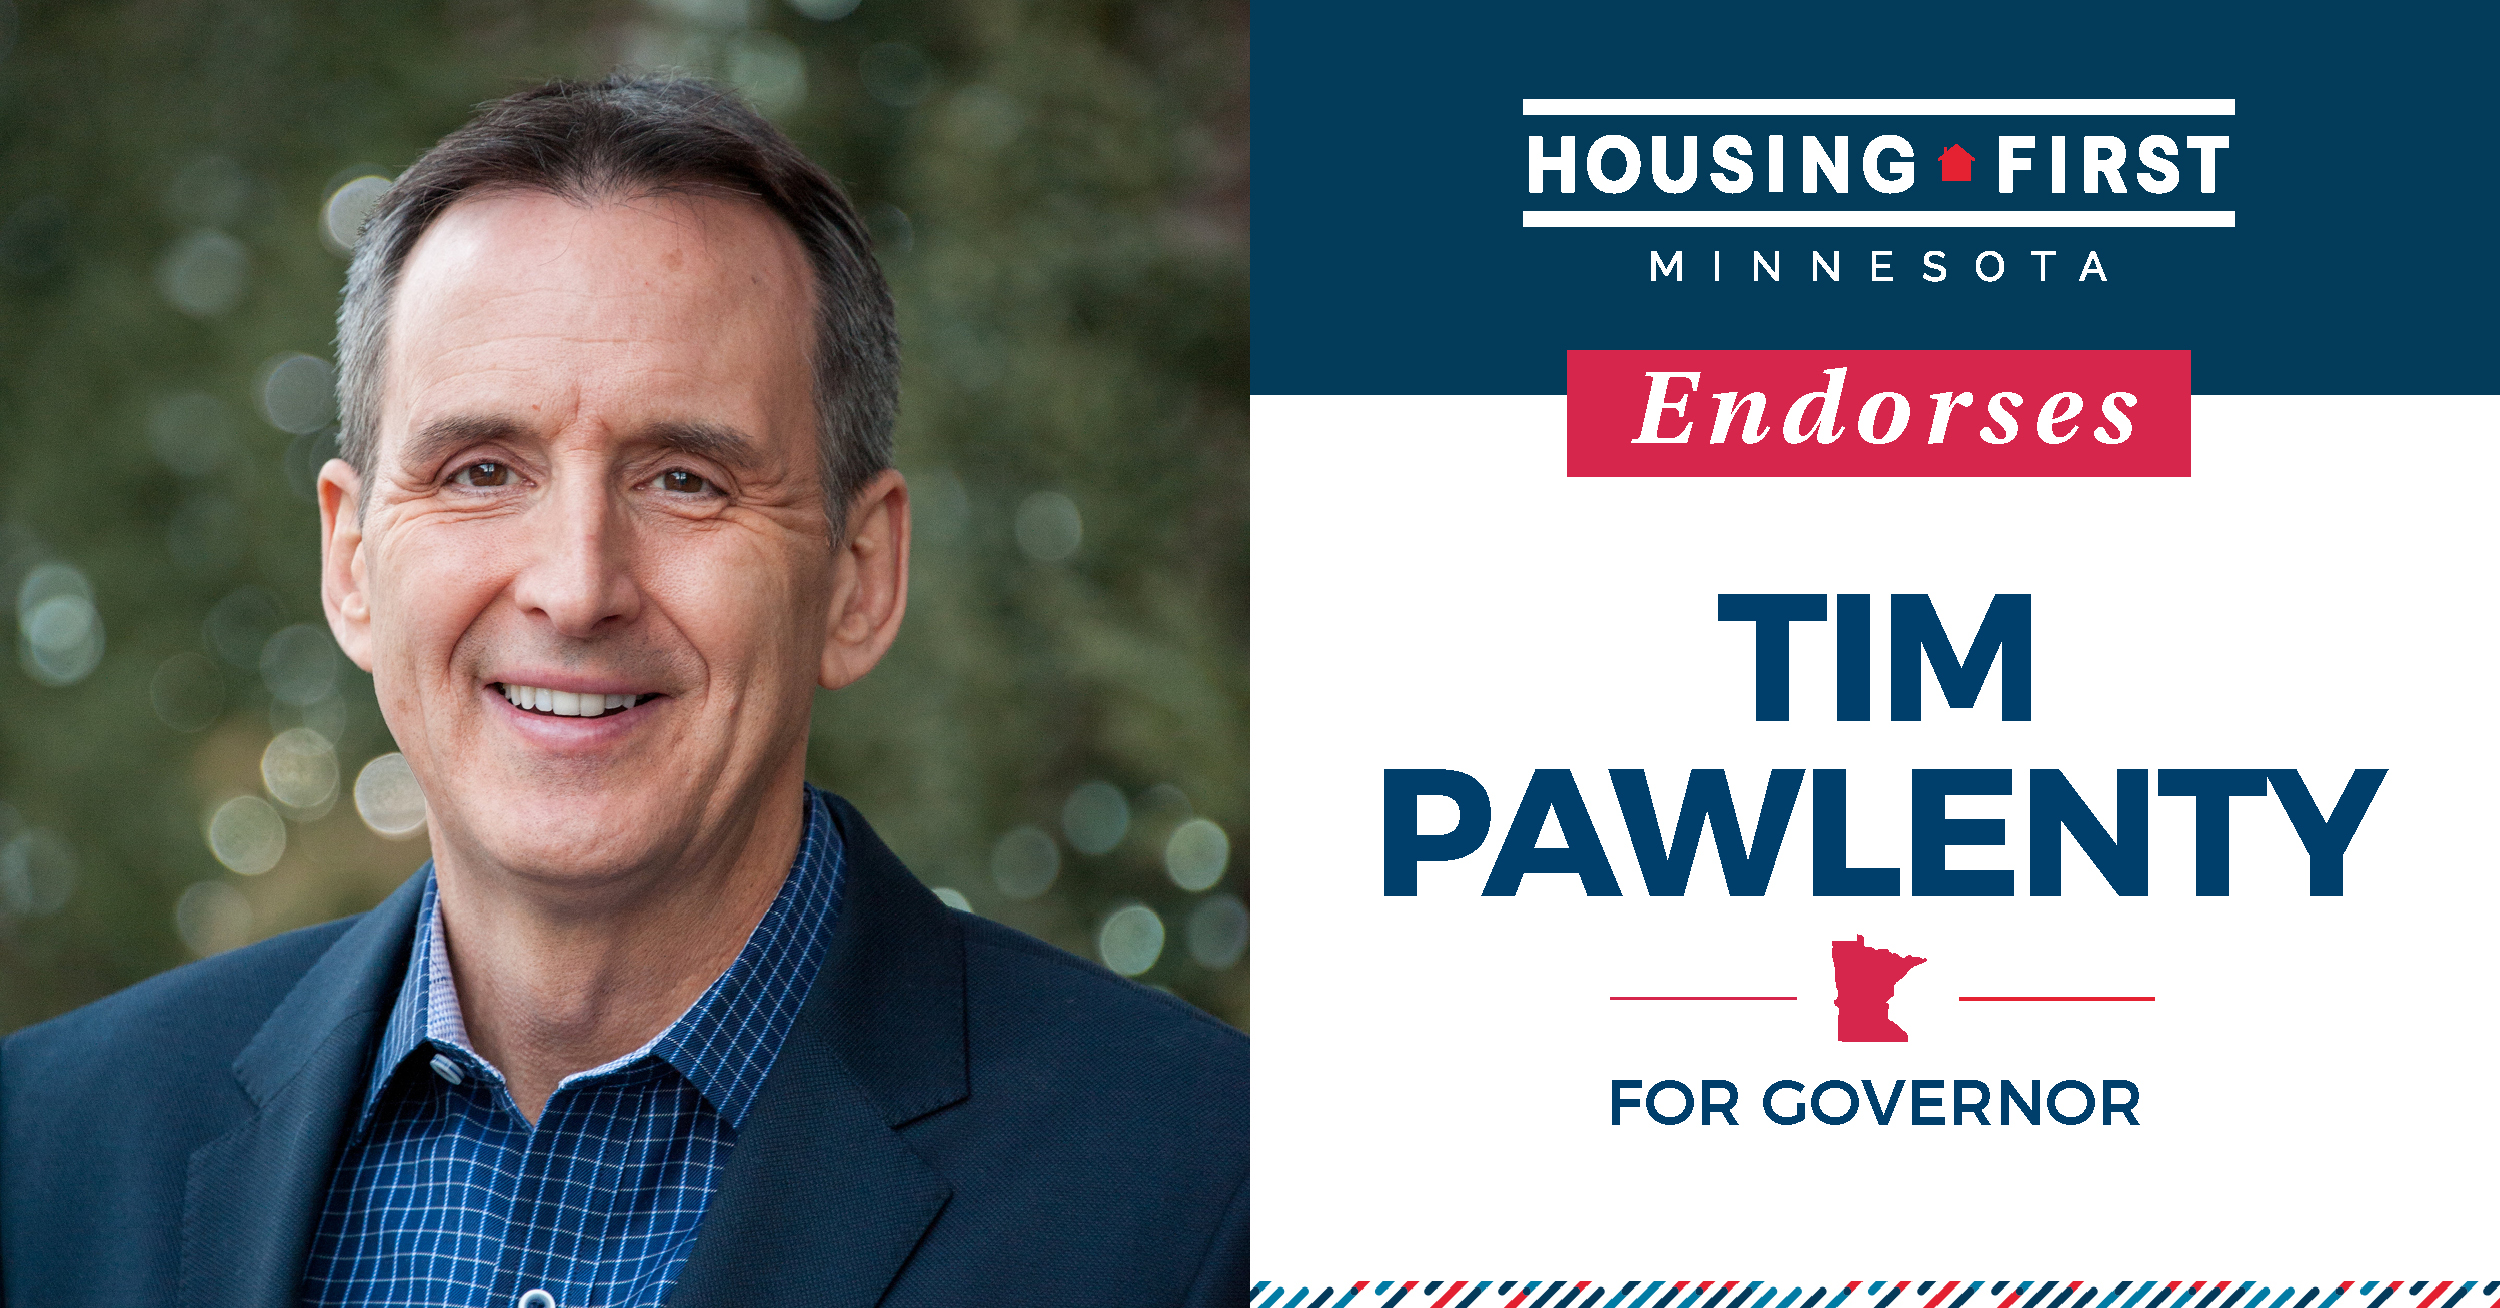 Image for Housing First Minnesota Endorses Tim Pawlenty for Governor